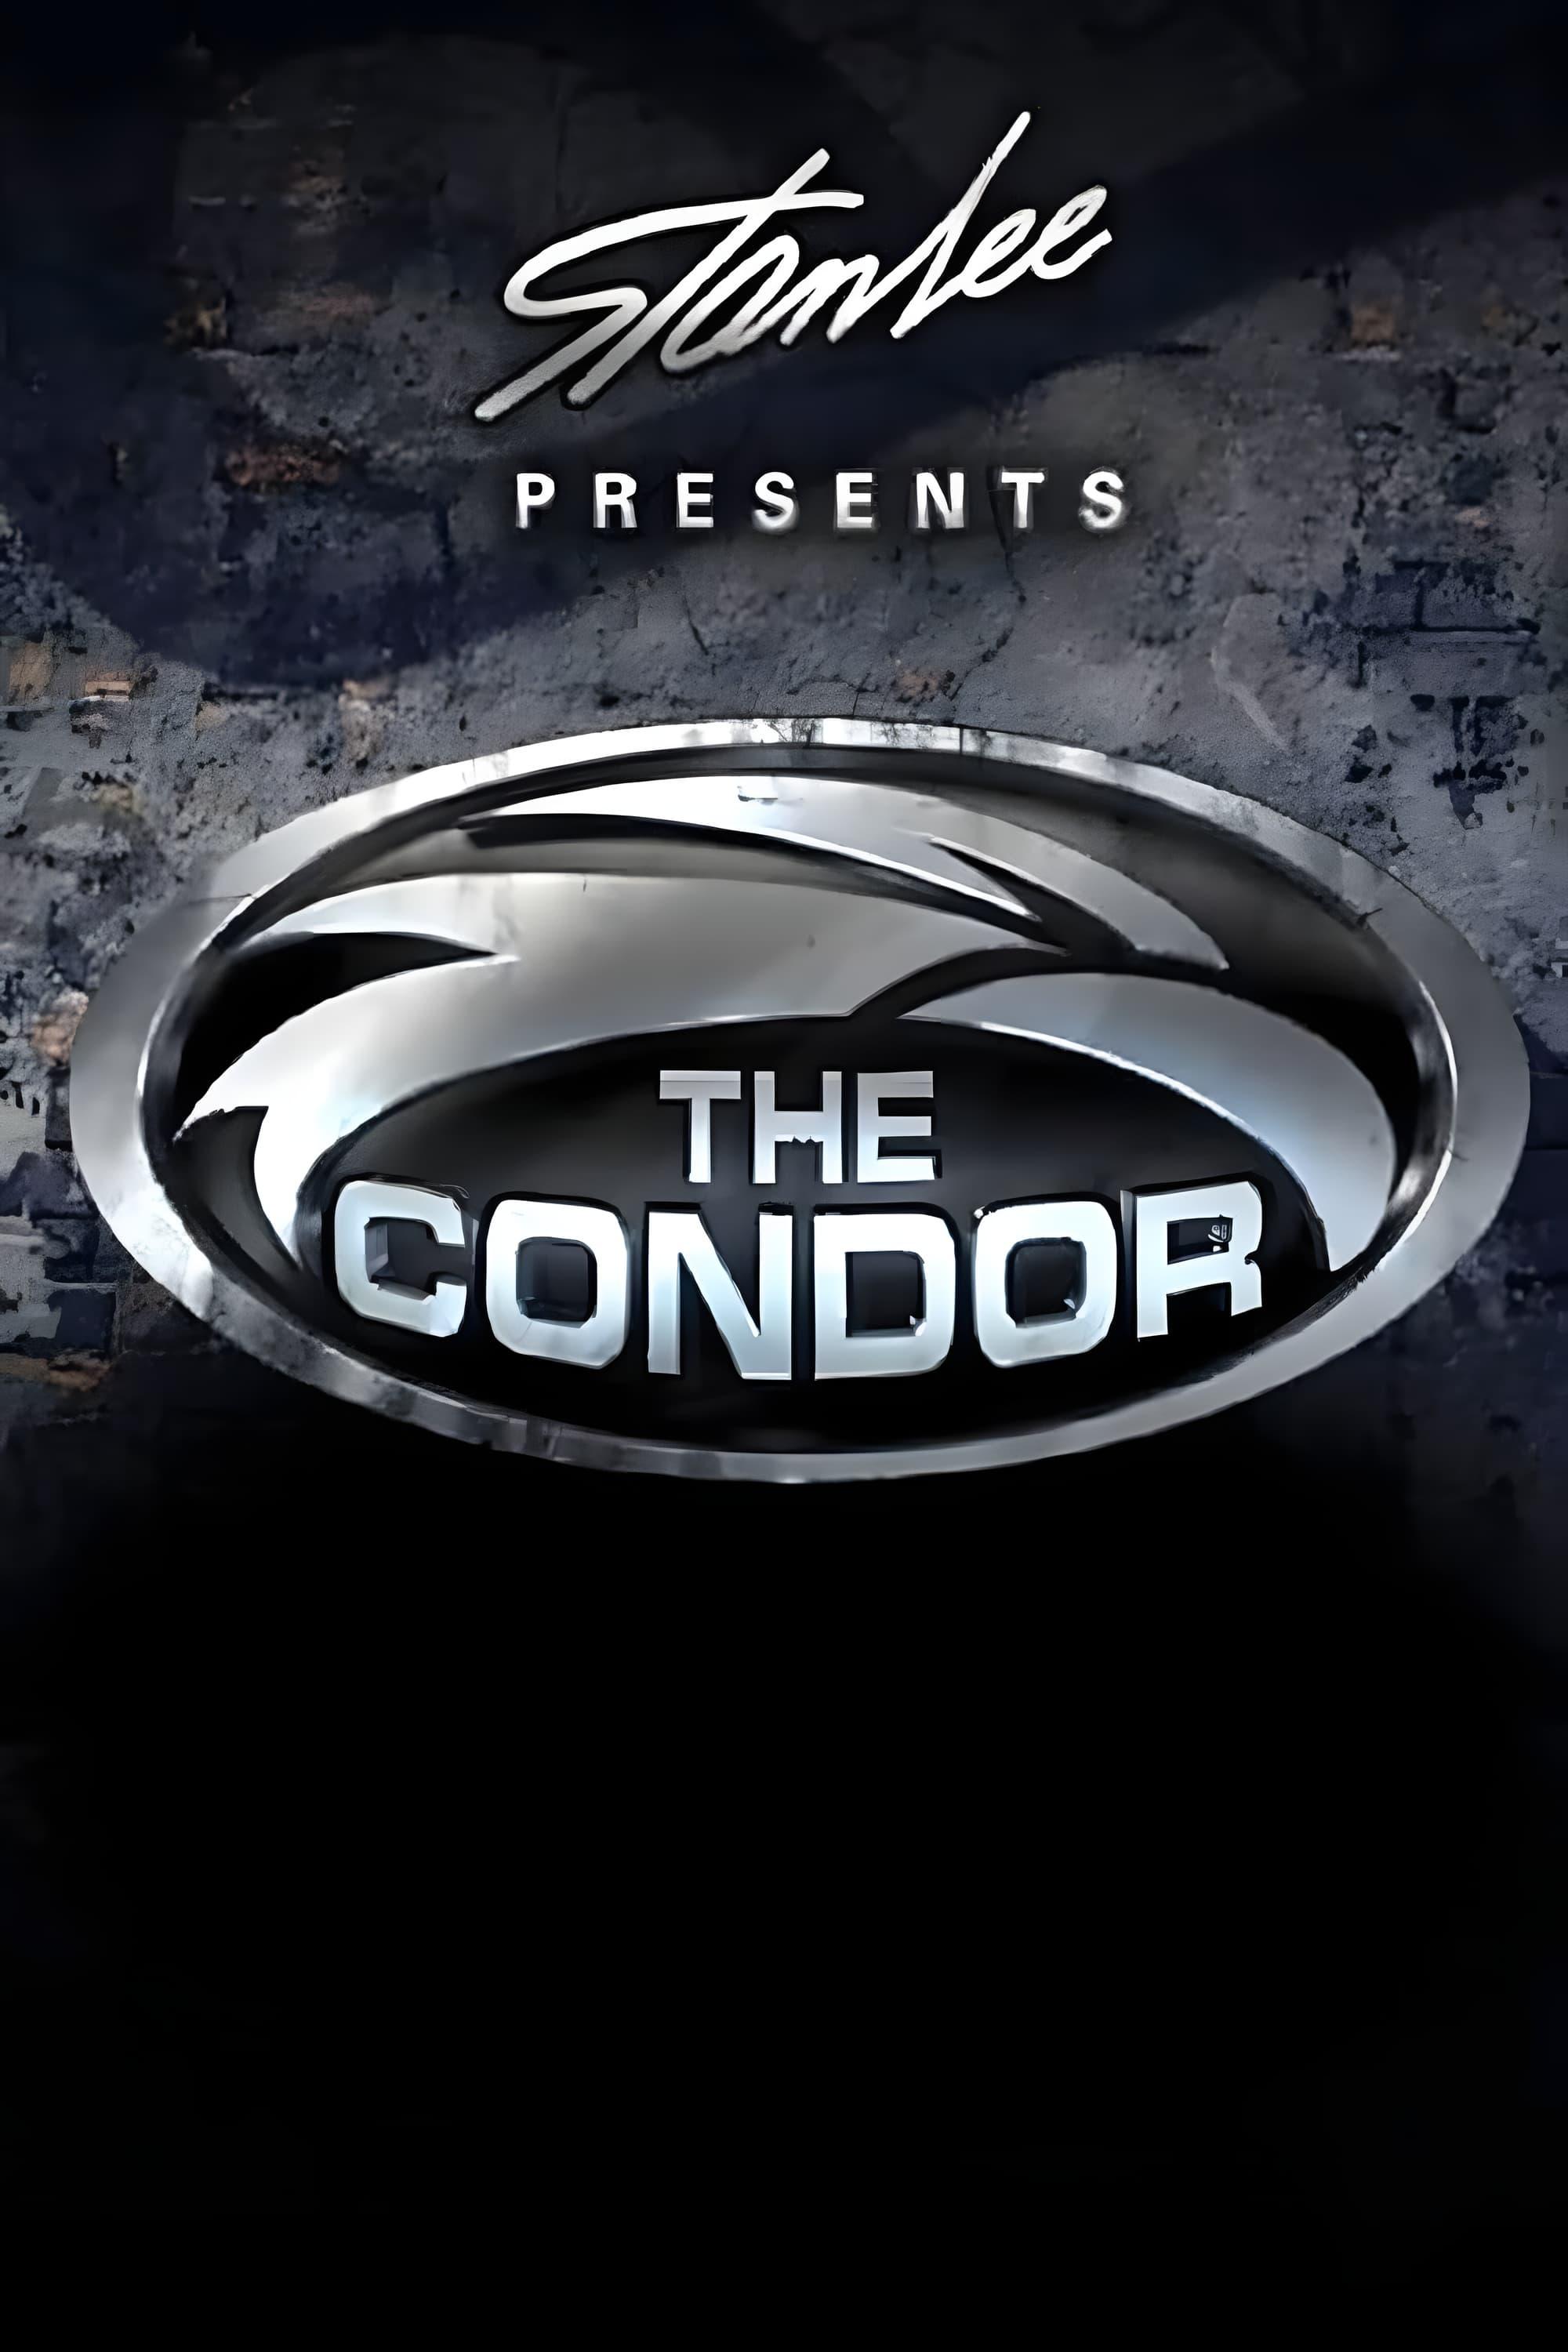 The Condor poster